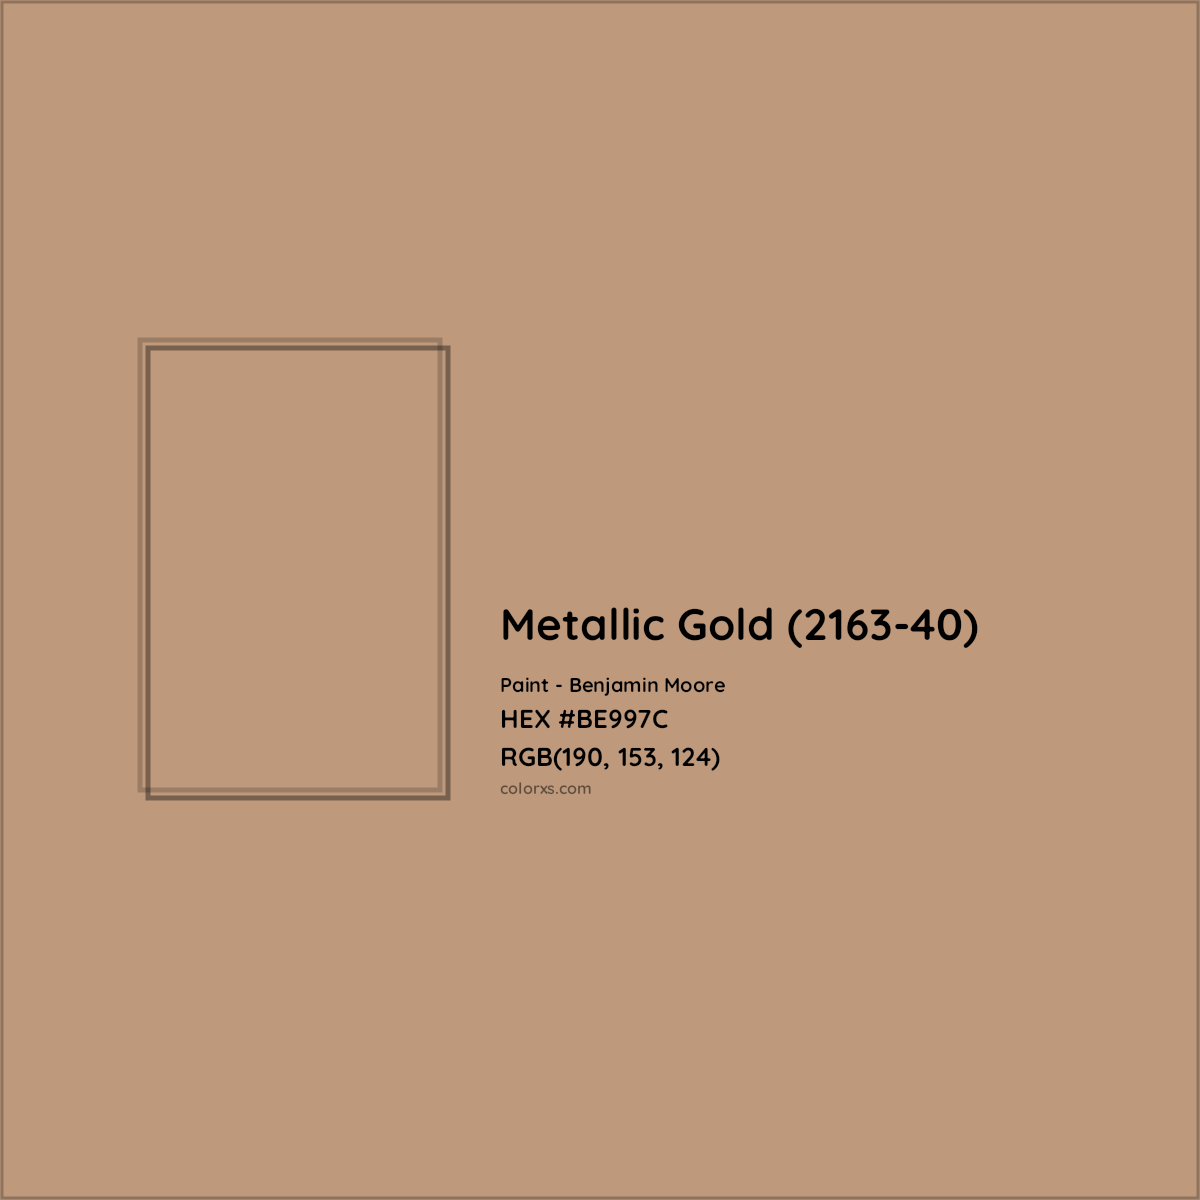 Metallic Gold Pantone Color Code Infoupdate Org